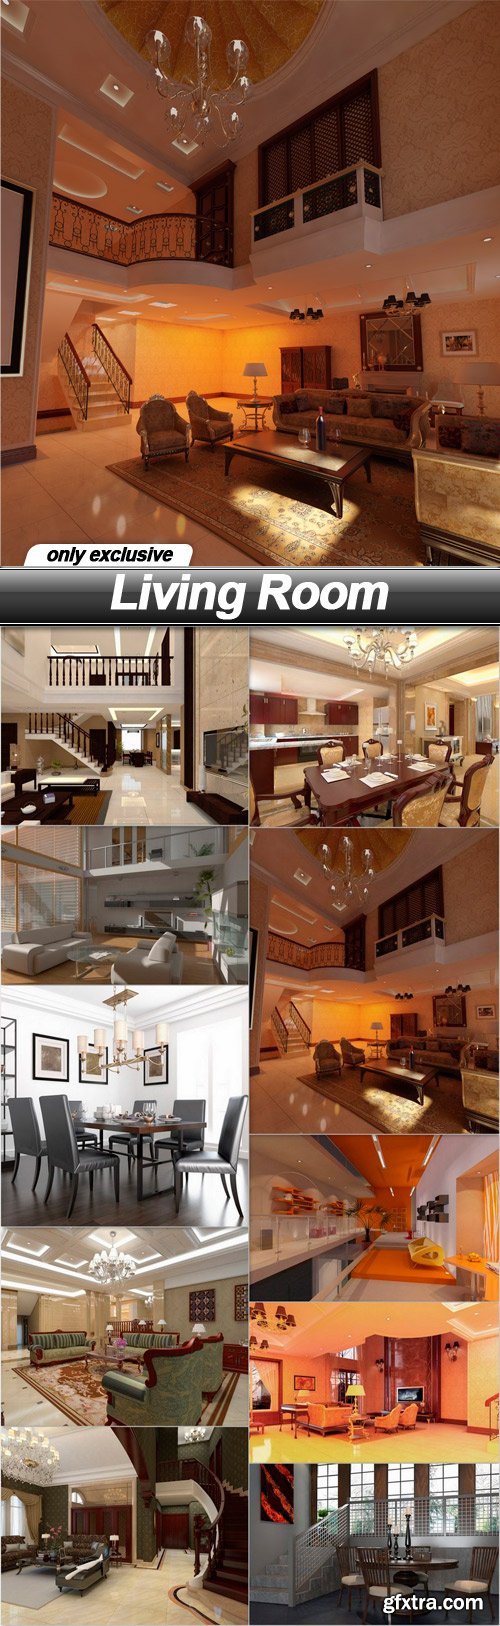 Living Room - 10 UHQ JPEG